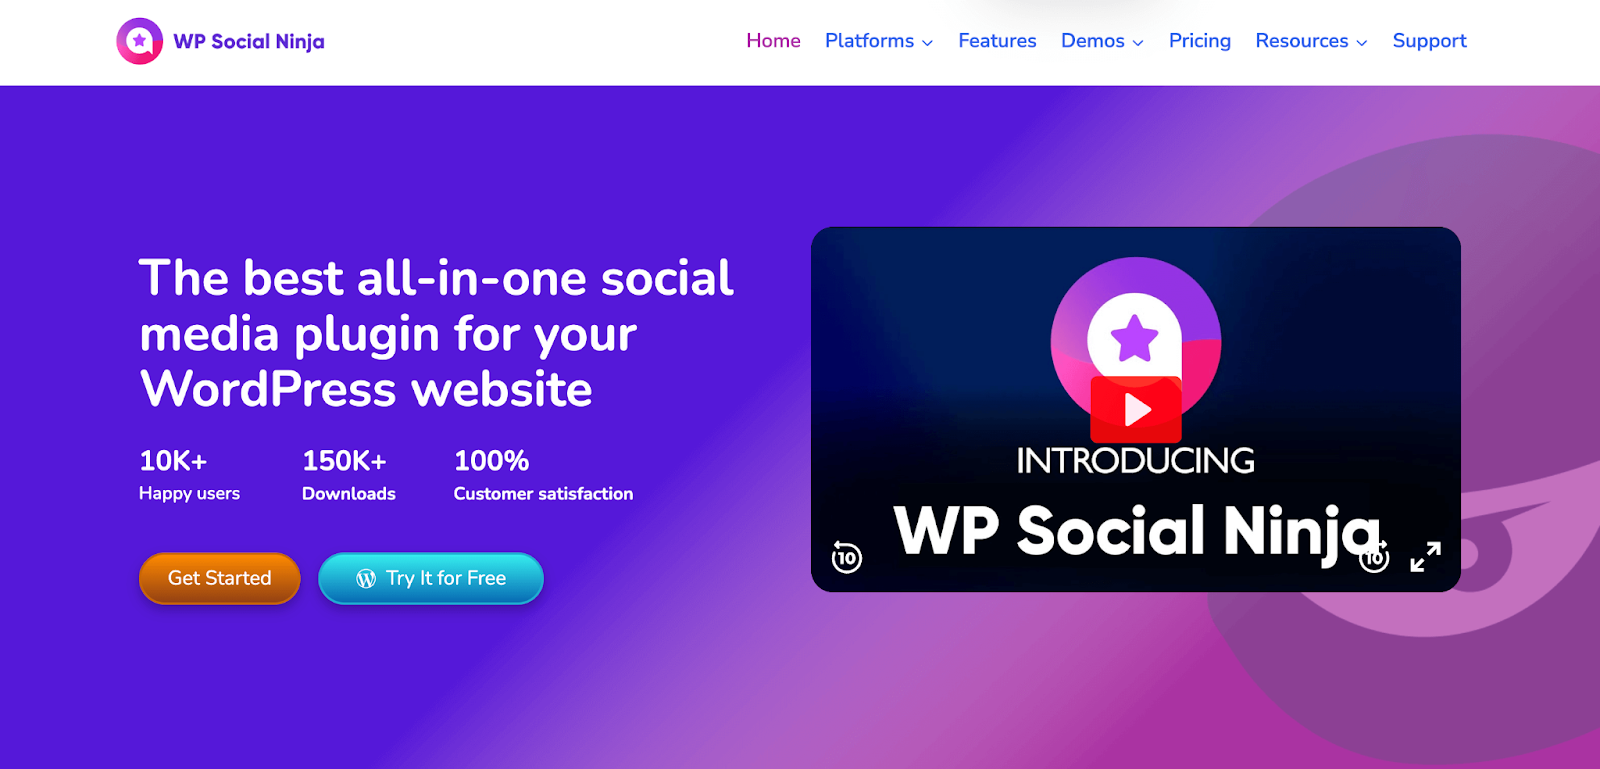 WP Social Ninja: an all-in-one social media plugin